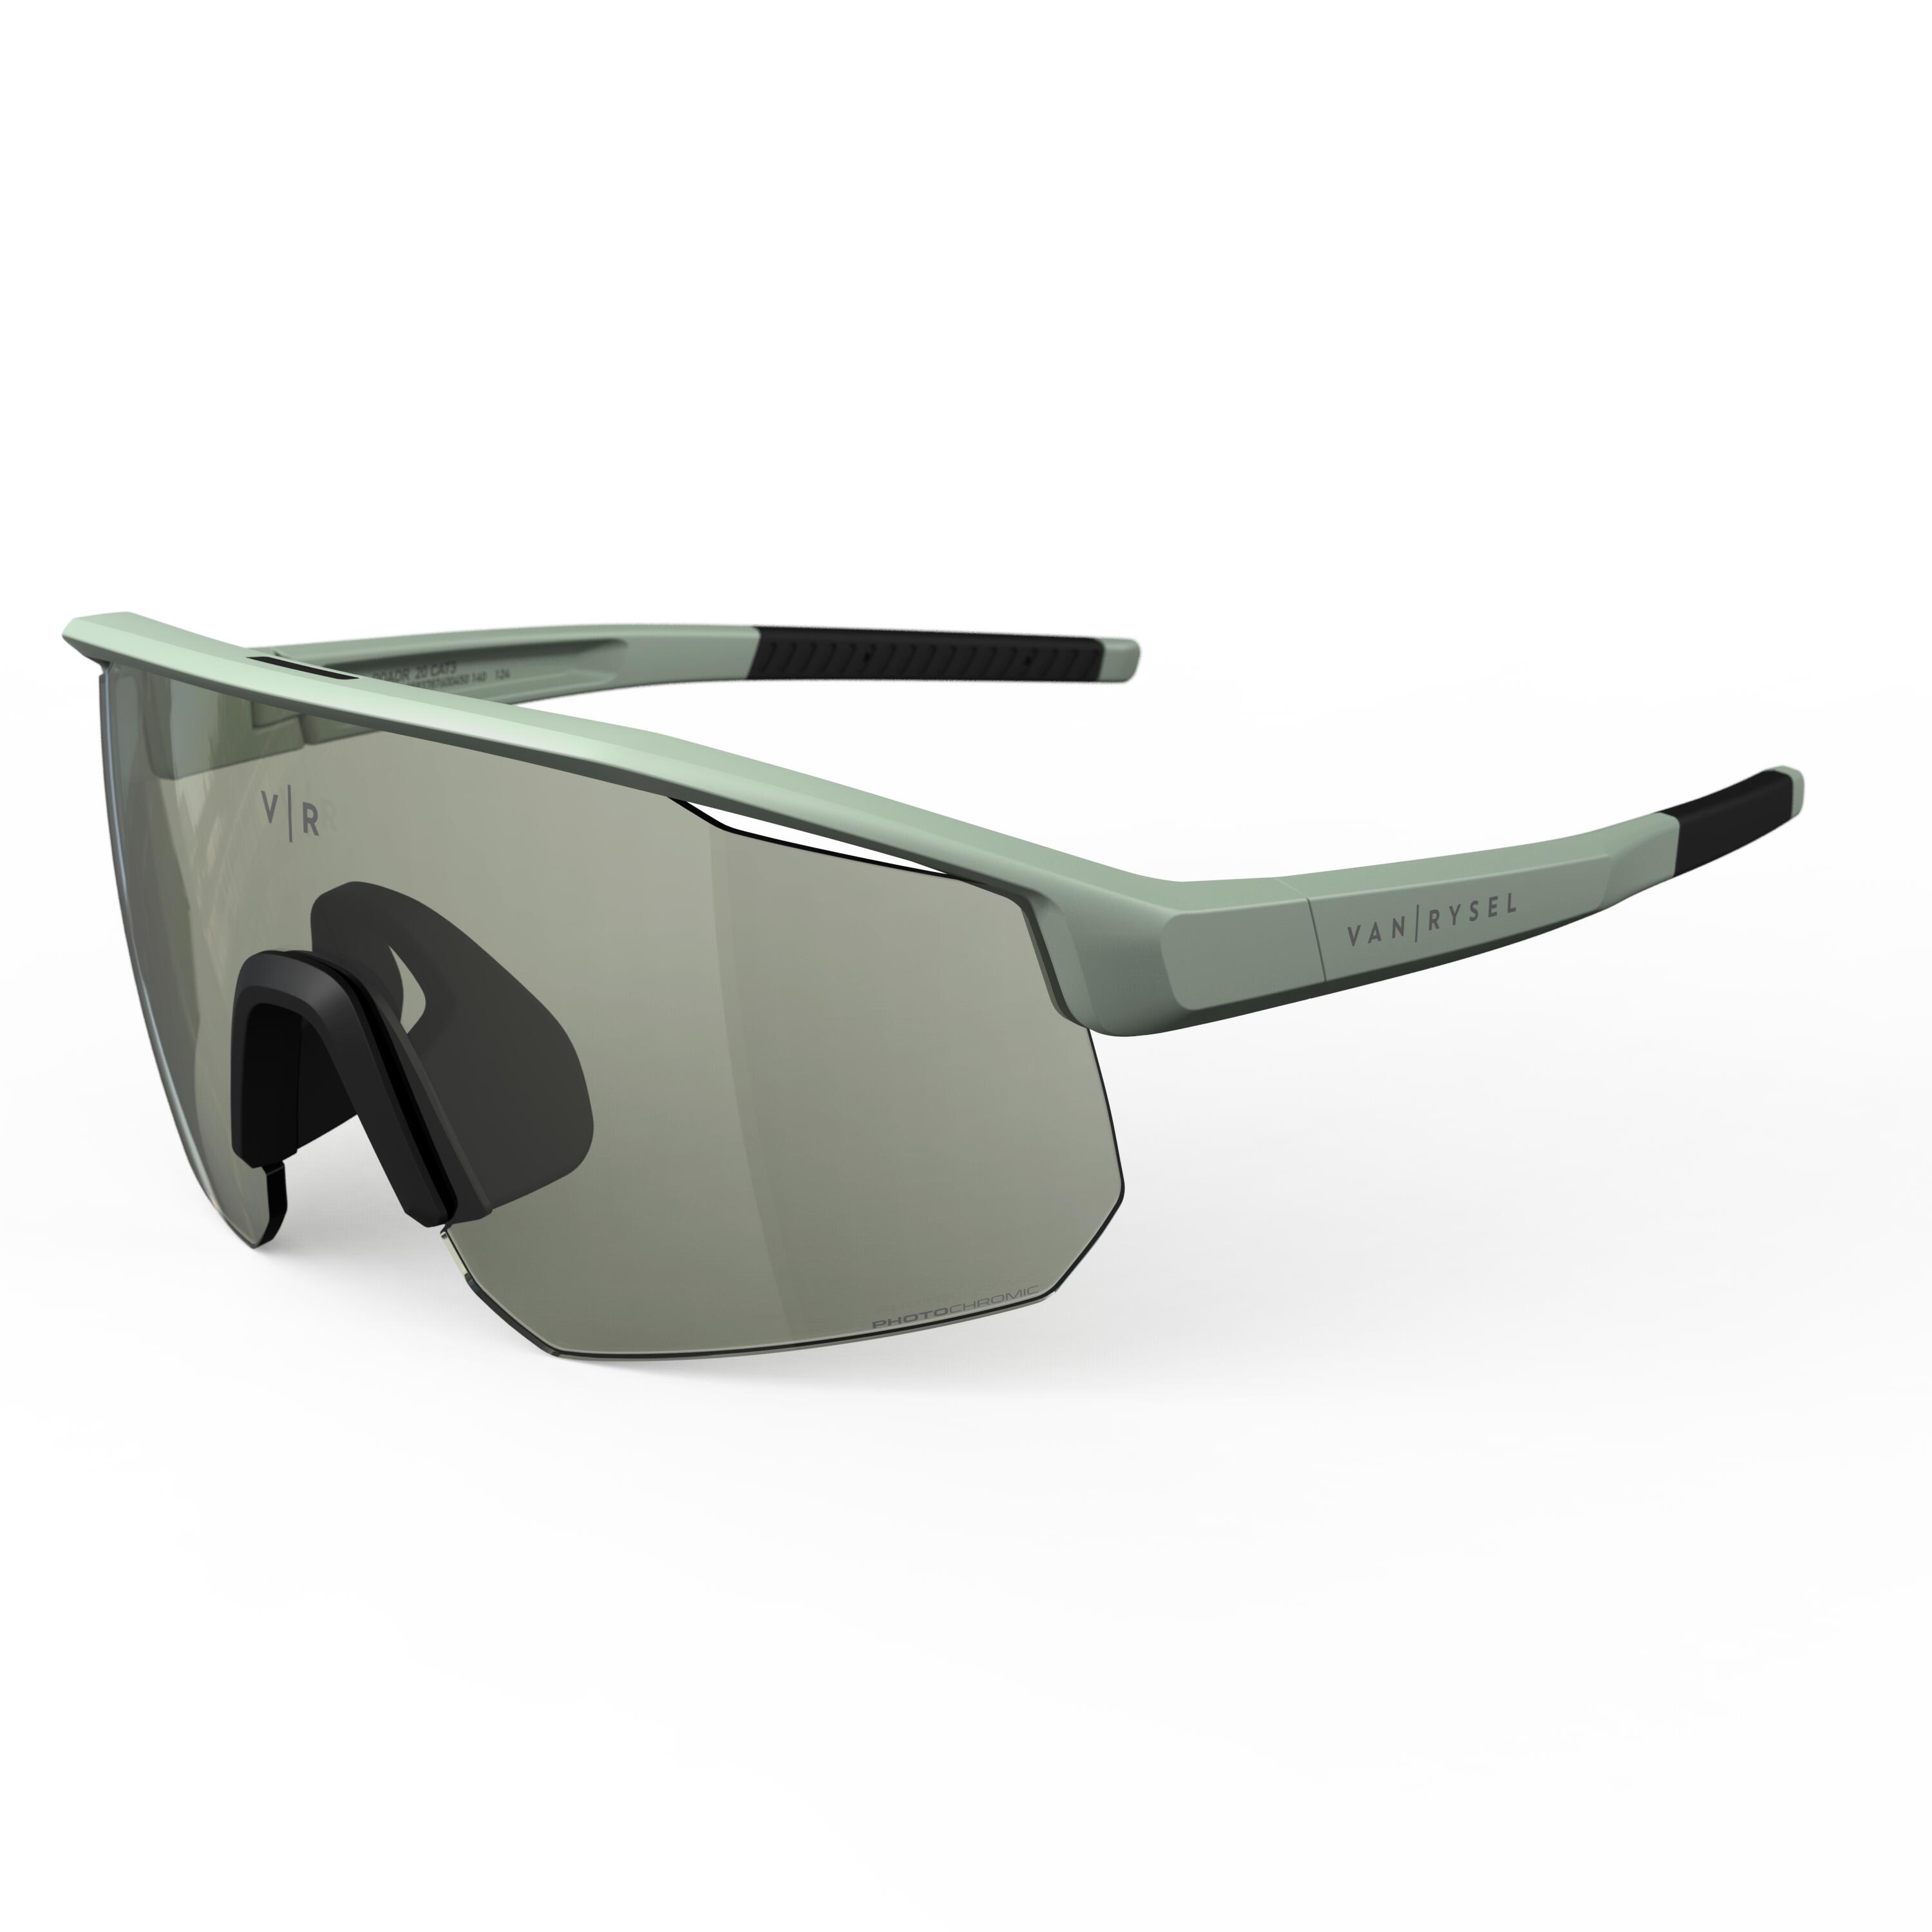 Photochromatic Cycling Glasses - RoadR 900 Grey - Sage green - Van rysel -  Decathlon